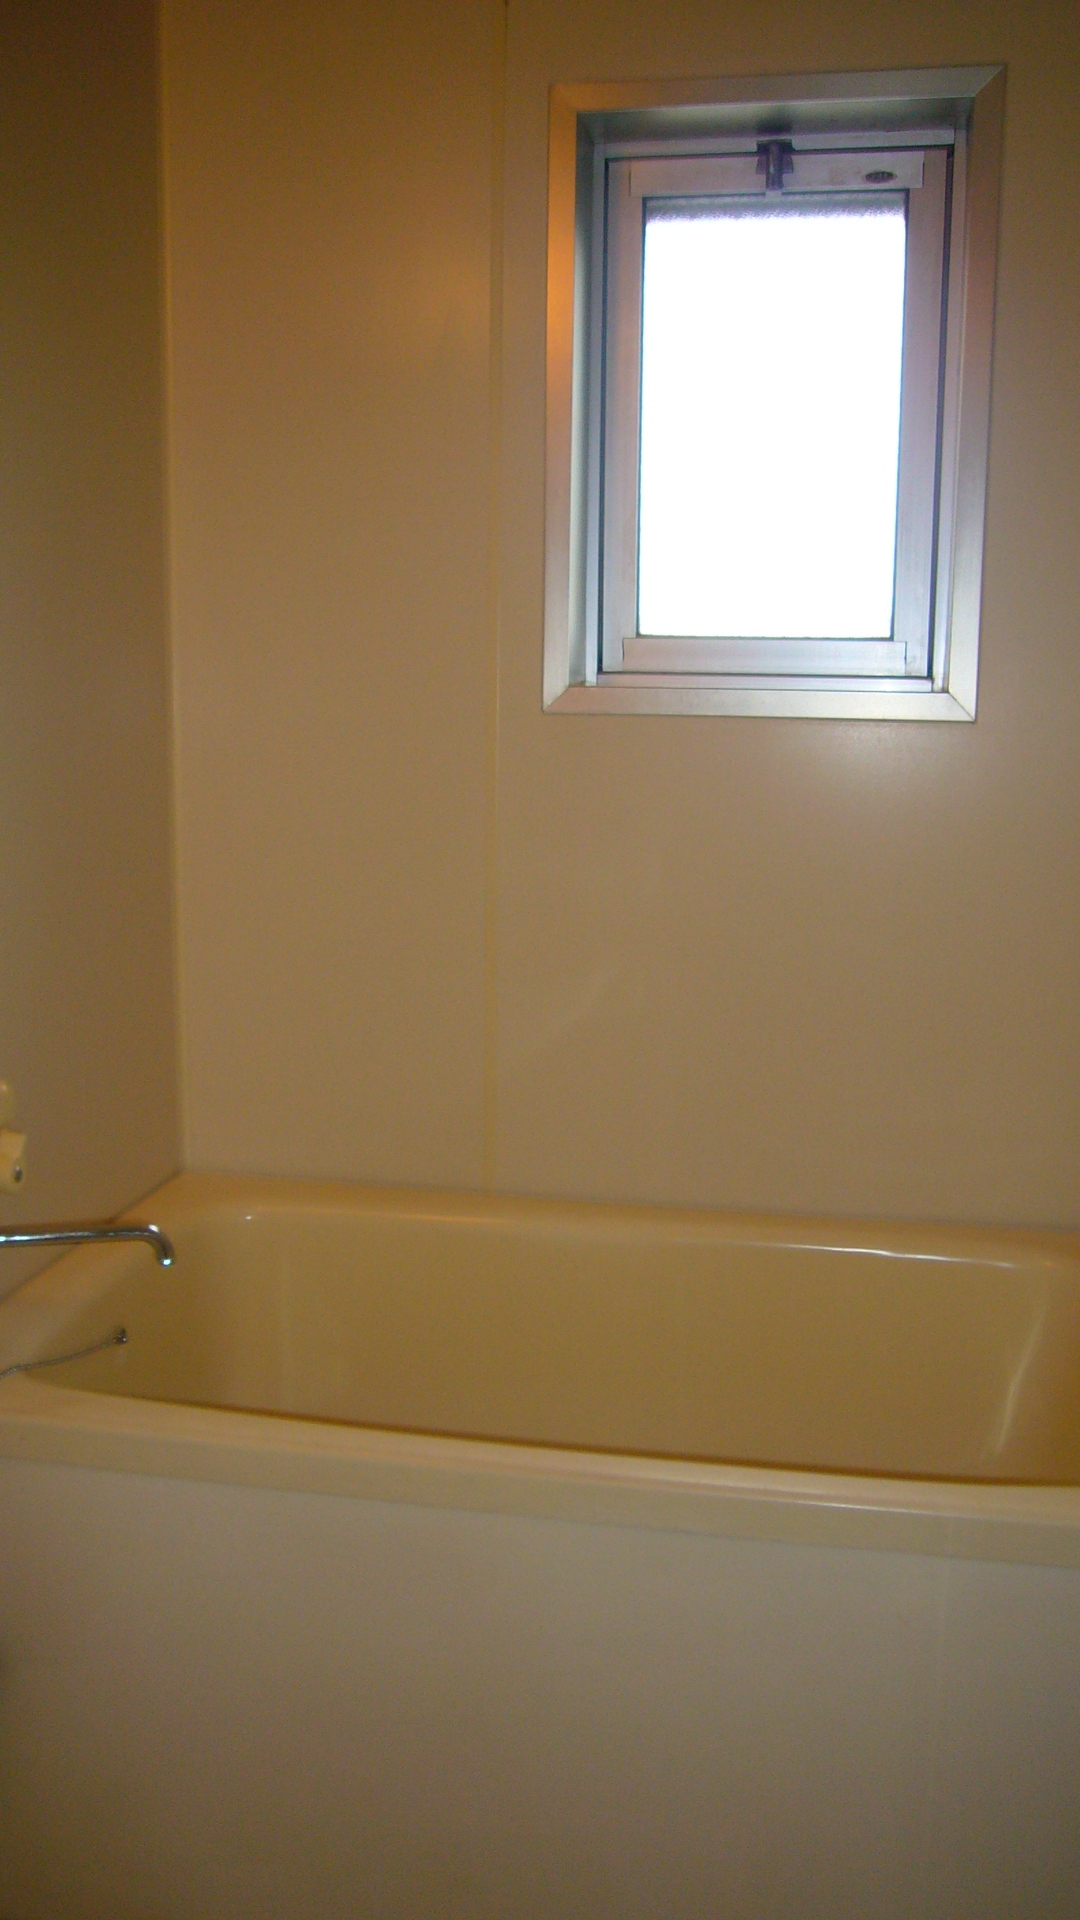 Bath. Bathroom is a window with